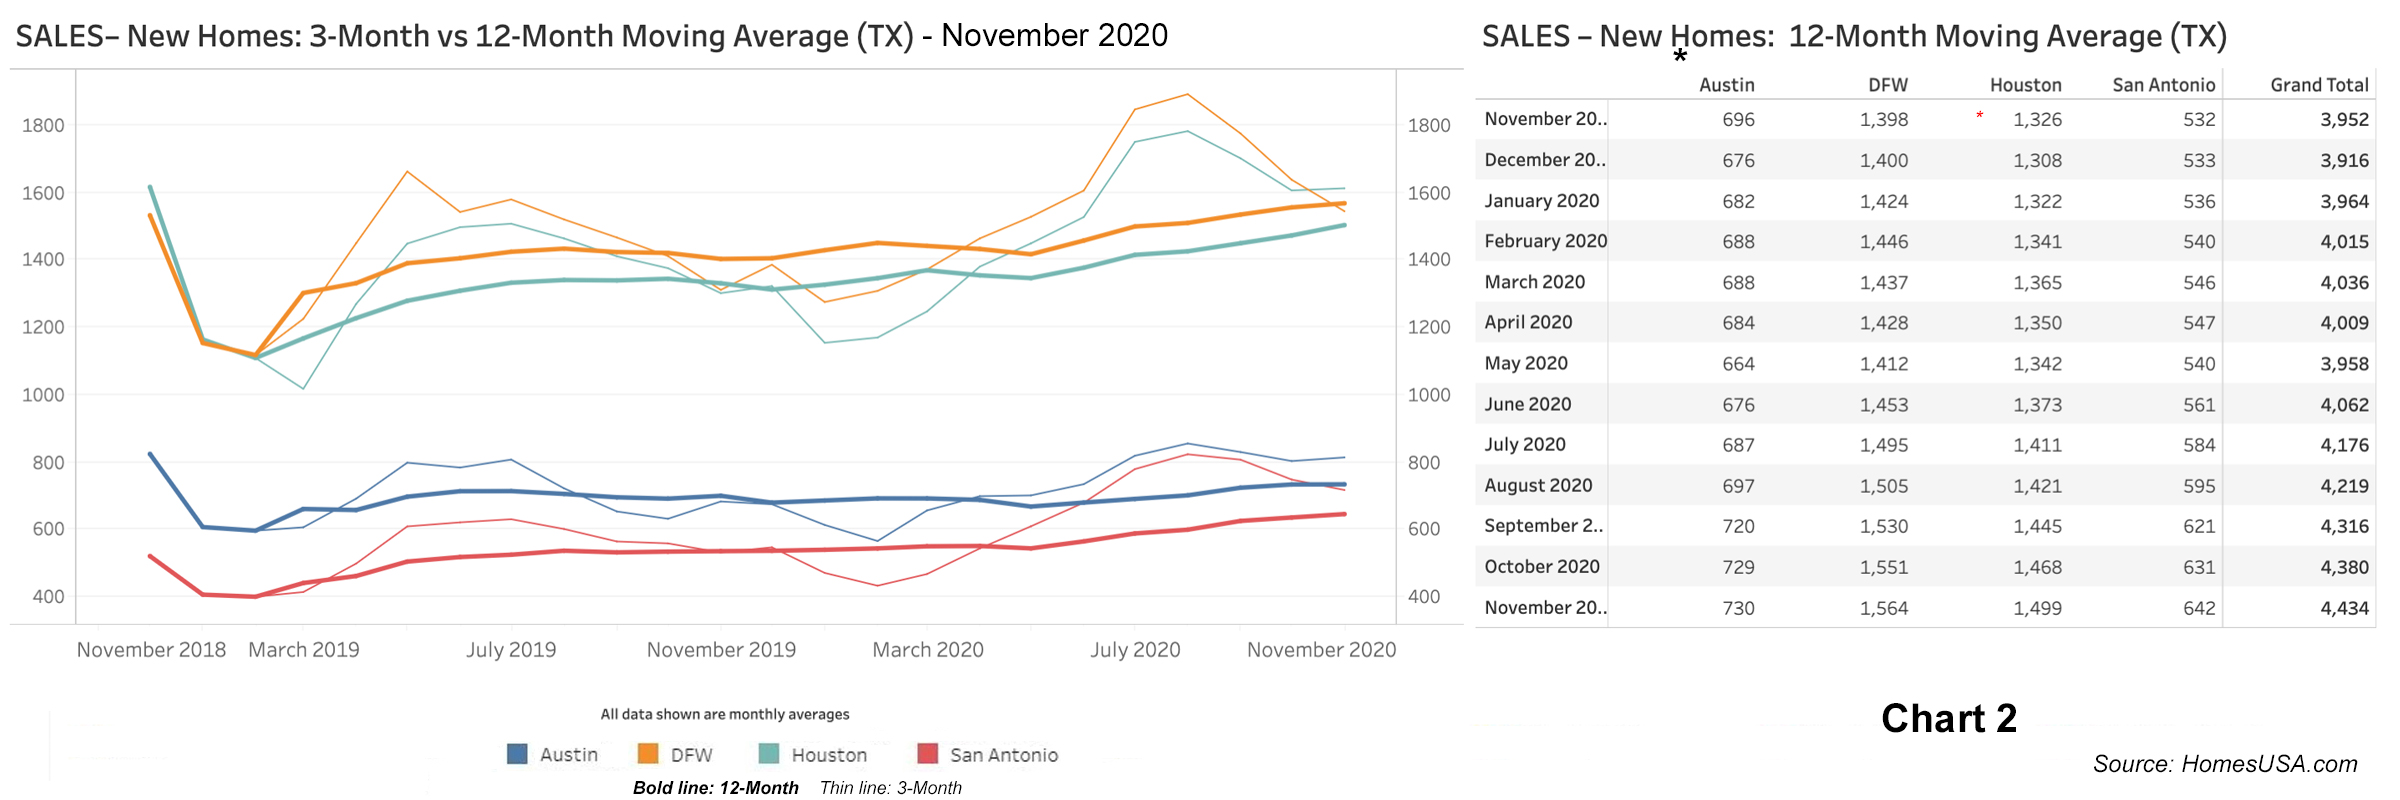 Chart 2: Texas New Home Sales - November 2020